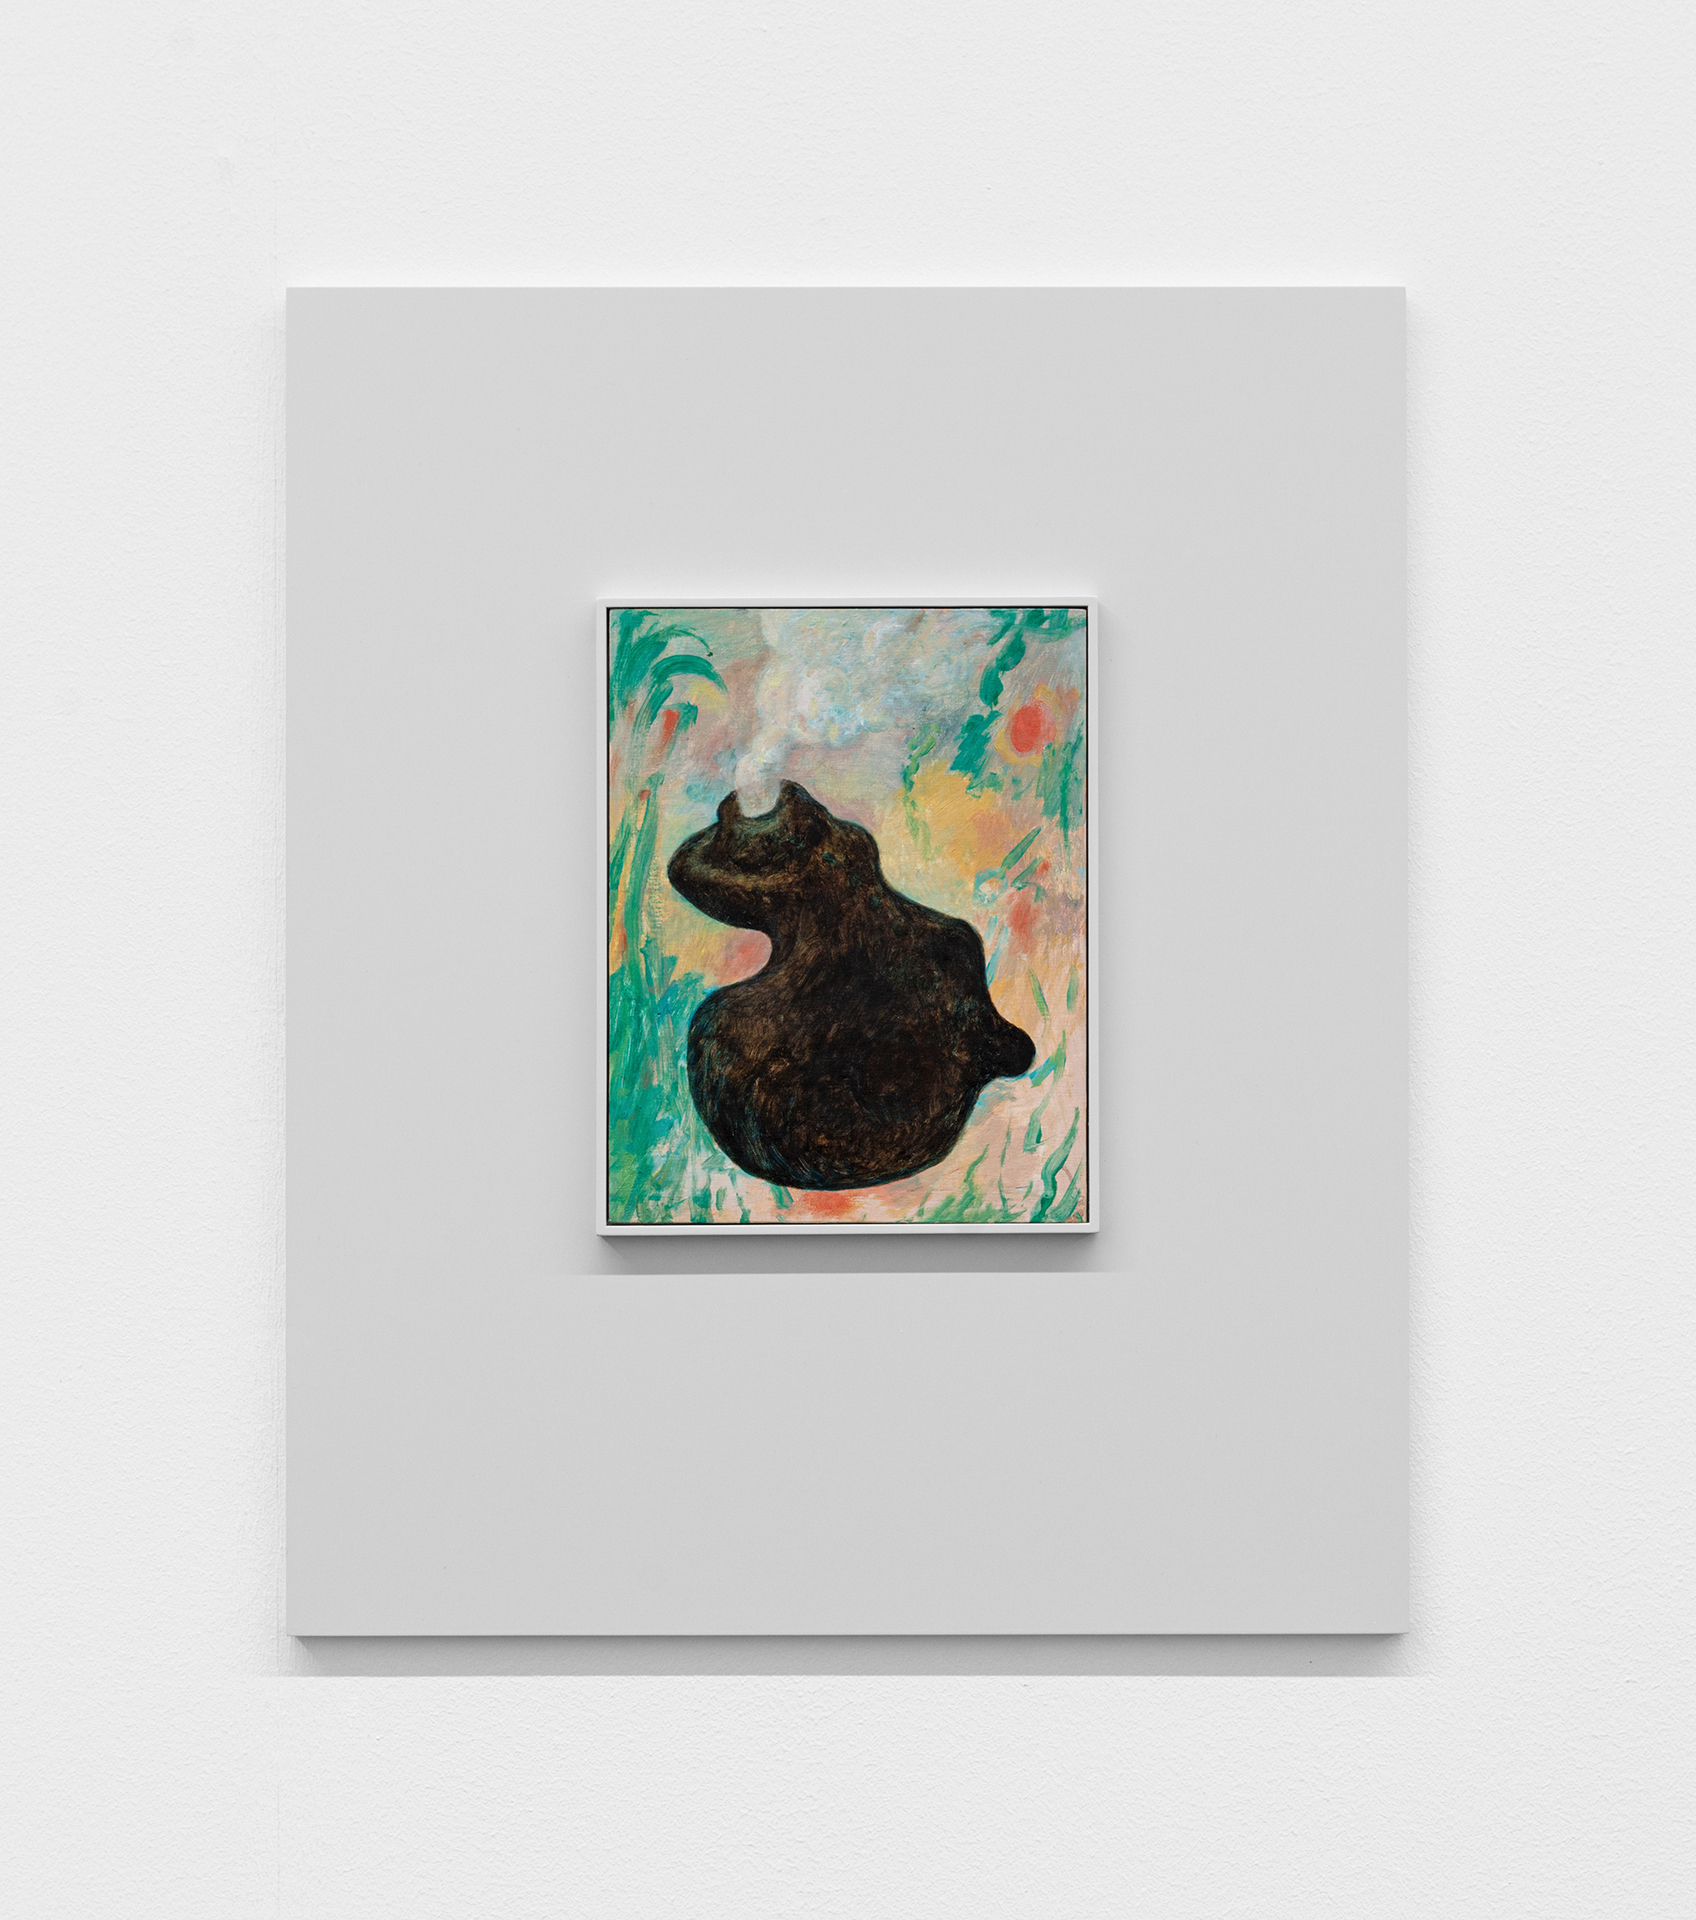 Camillo Paravicini, Bidule pour Talou VII, 2021, Oil on wood in wooden frame, 60 x 50 cm